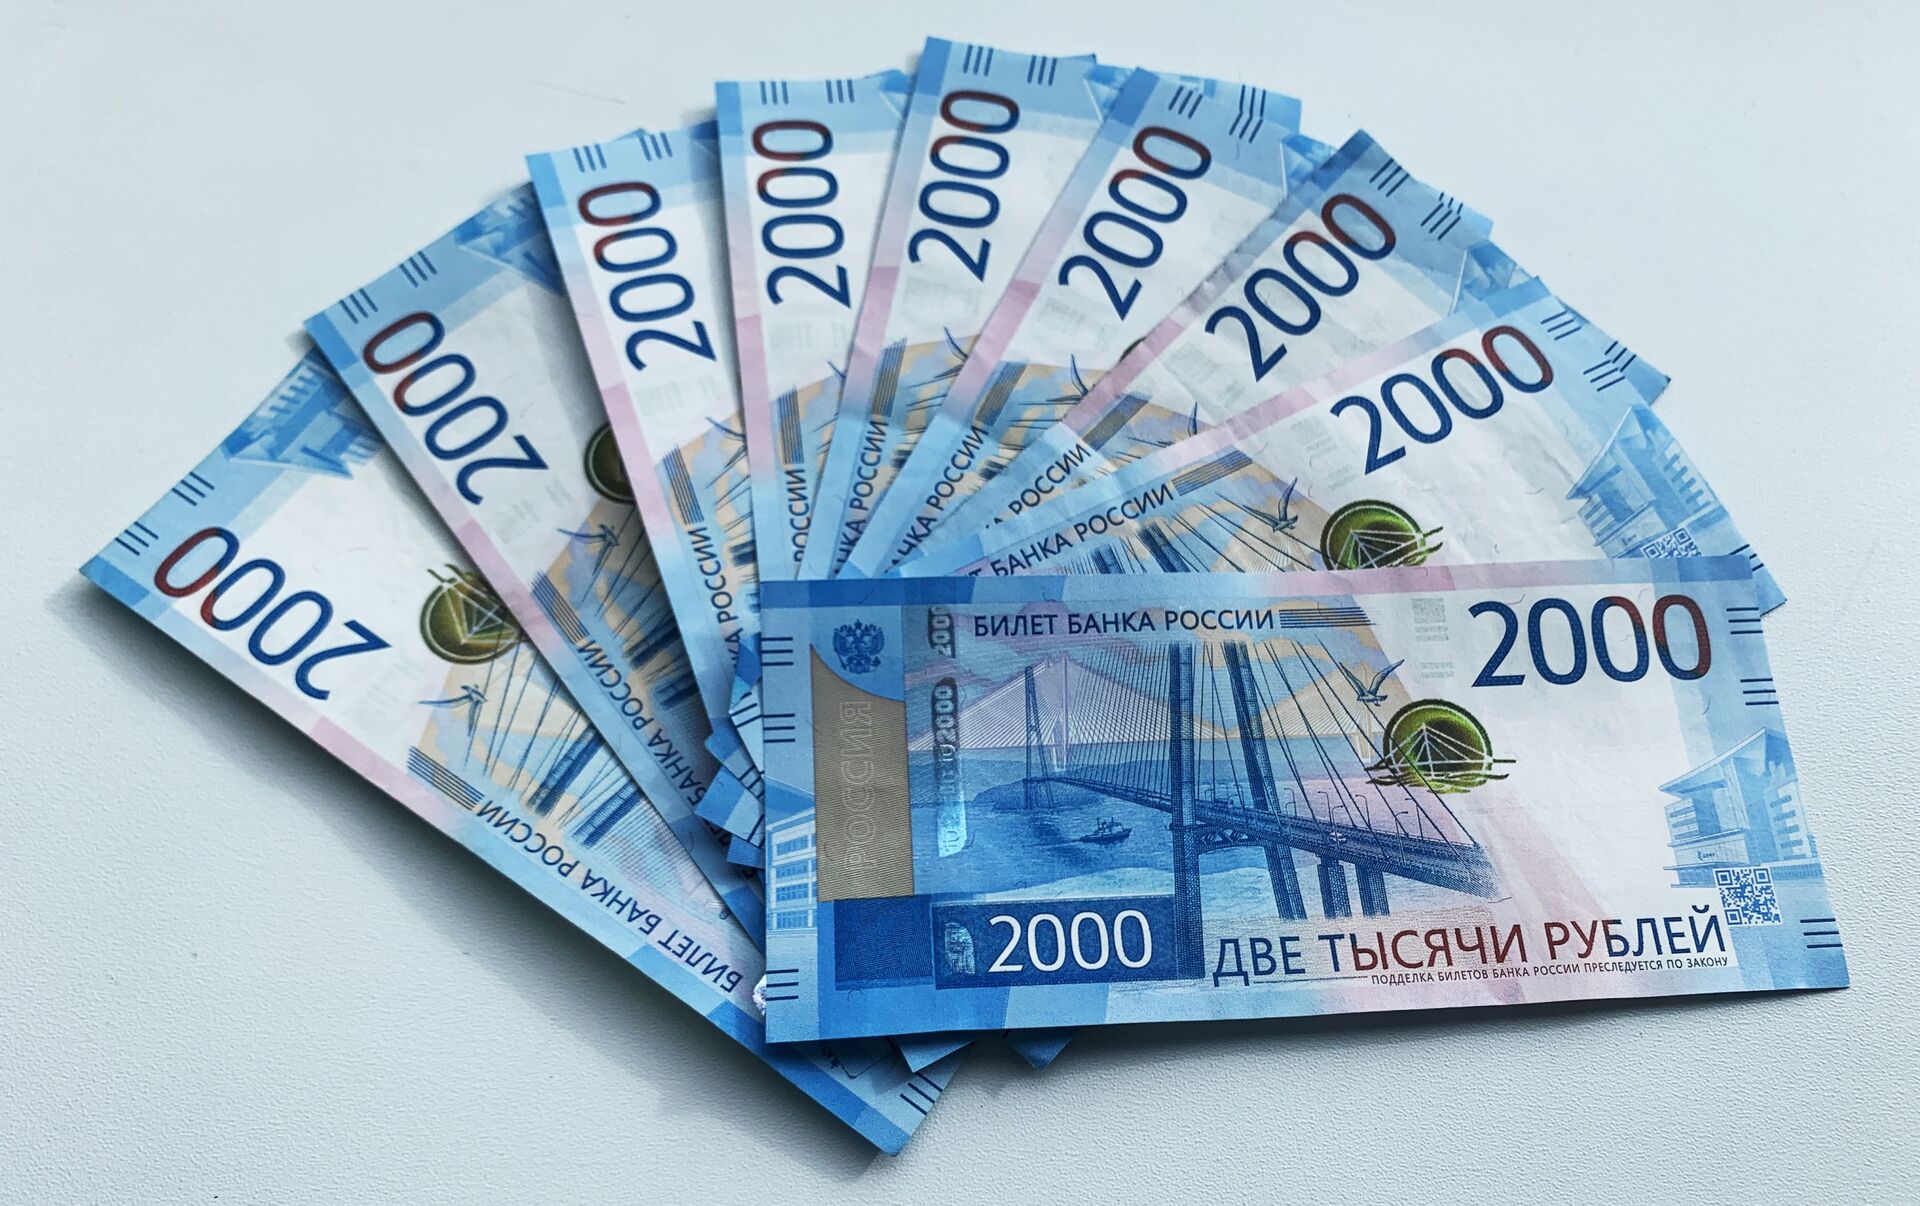 20 от 1000 рублей. 2000 Евро деньги. 2000 Евро в рублях. Рубли. 2000 Евро банкнота.